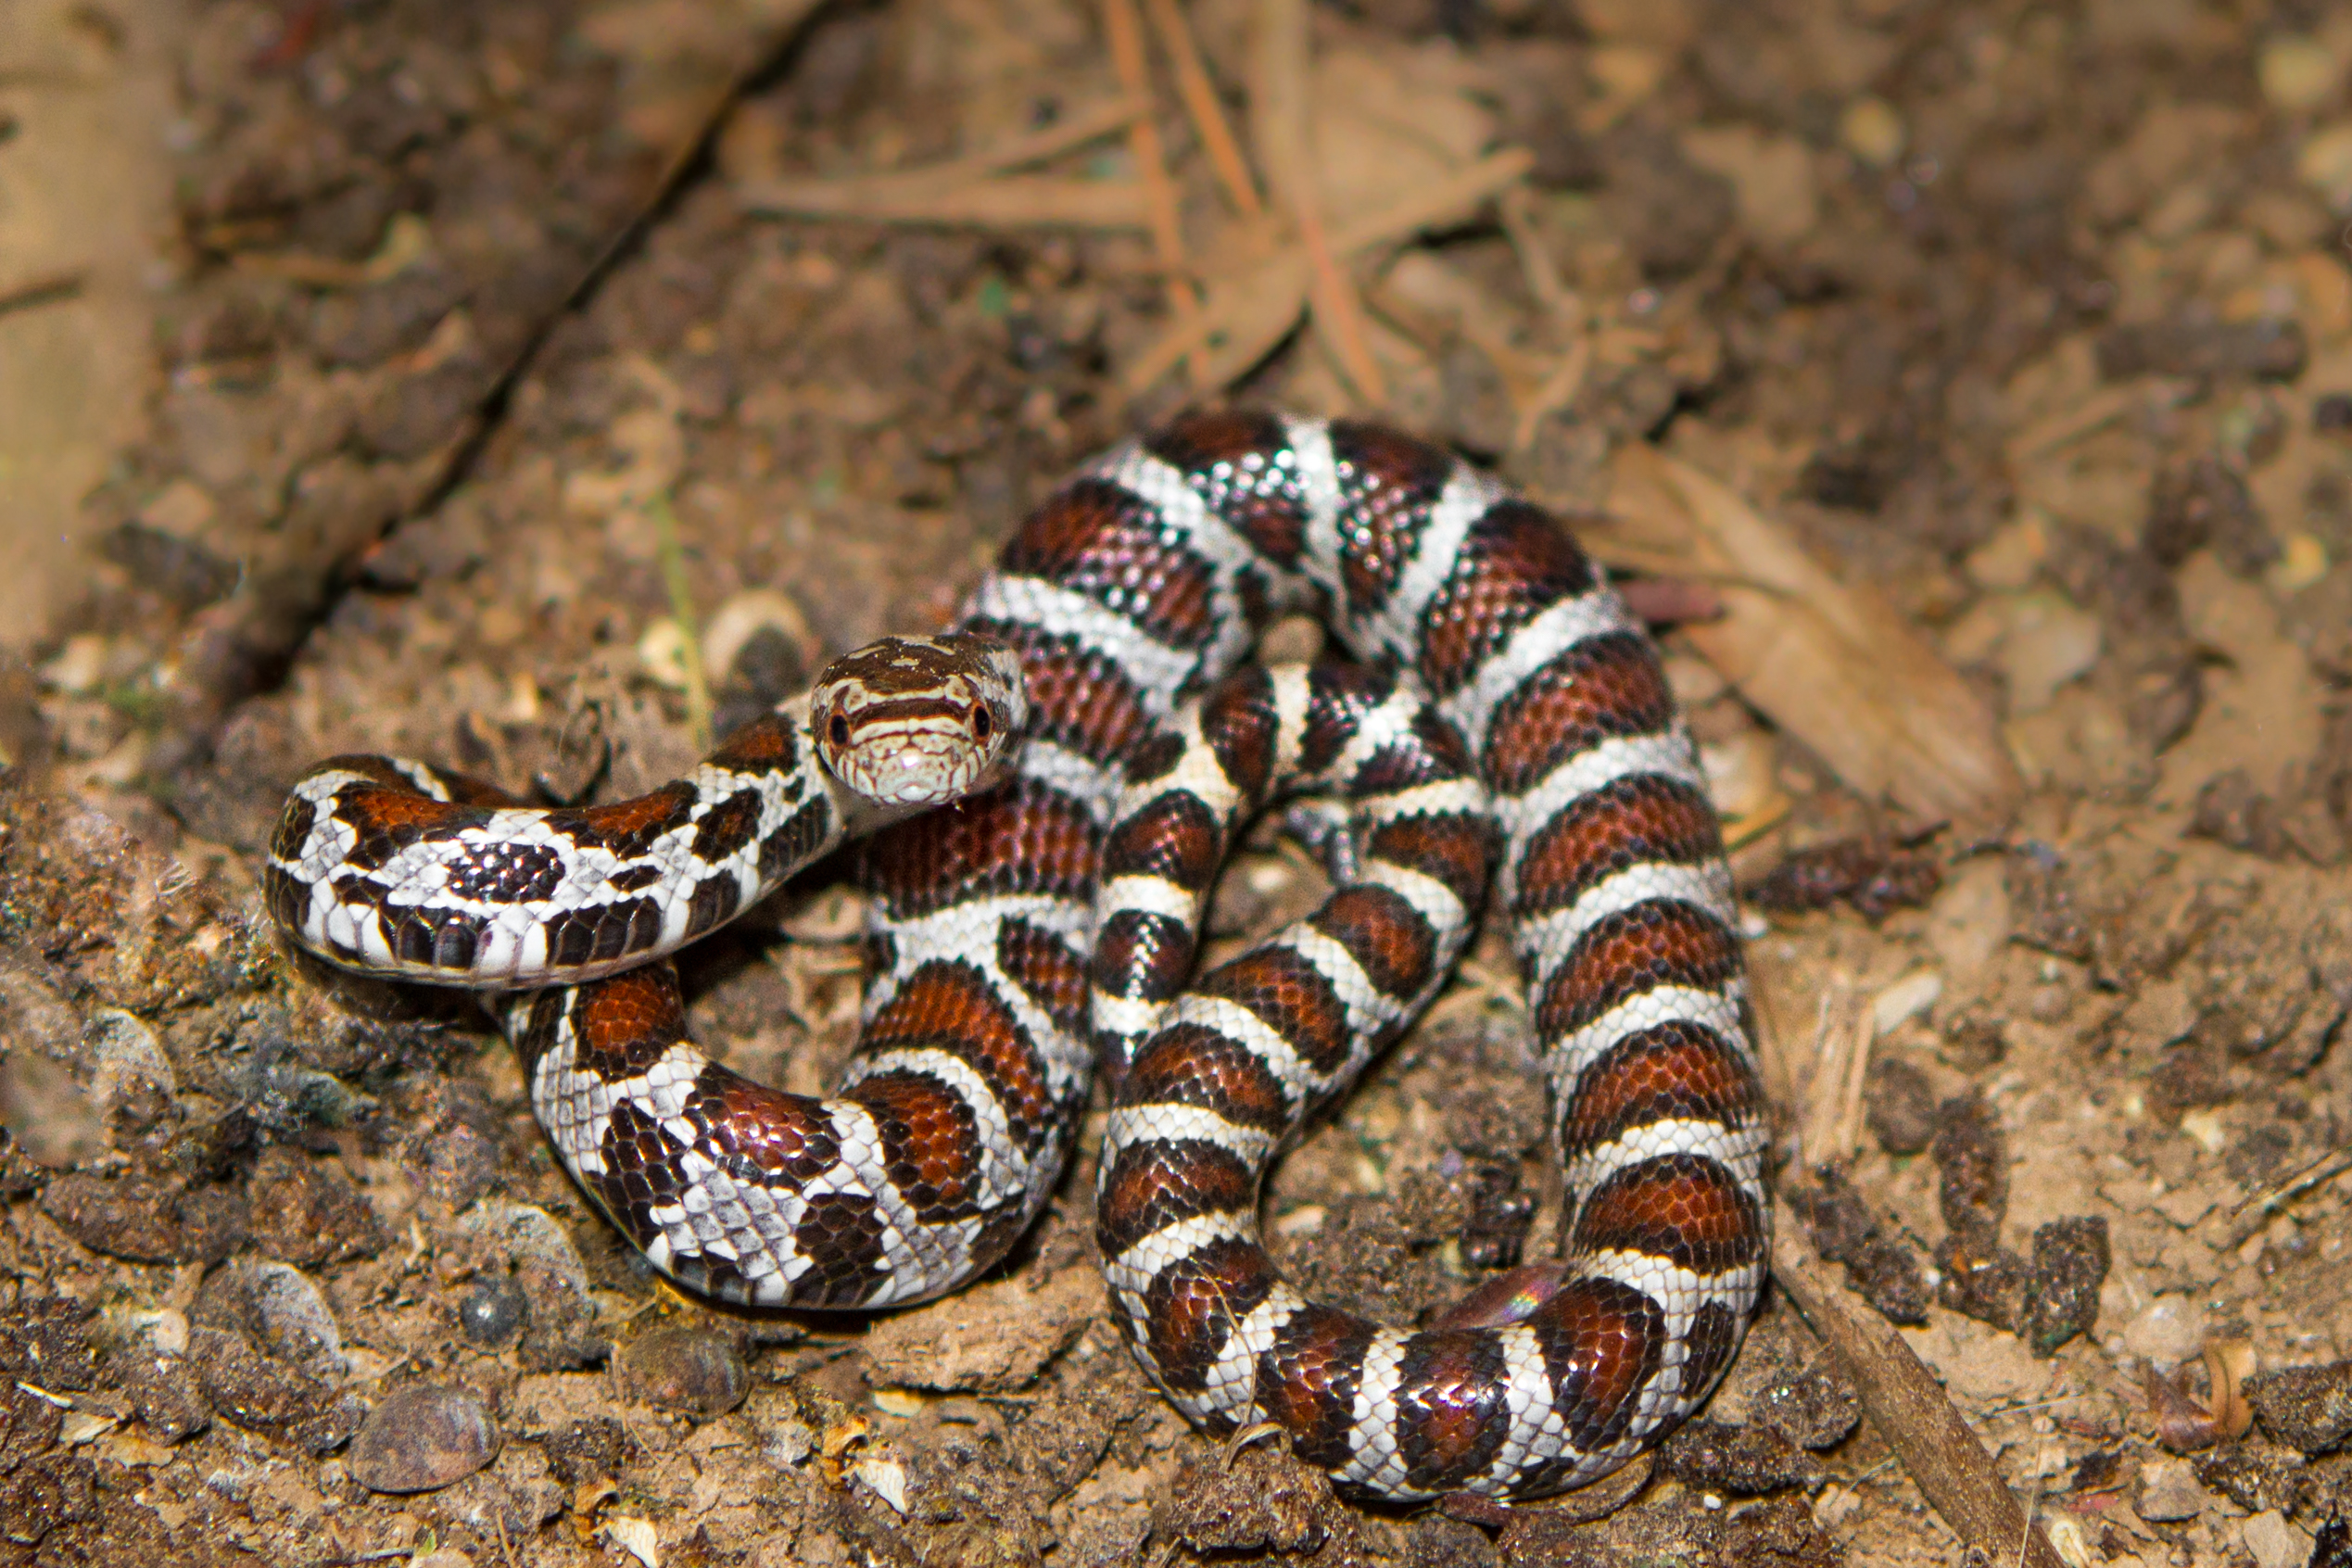 Milk snake, photo by Laurie Dirkx